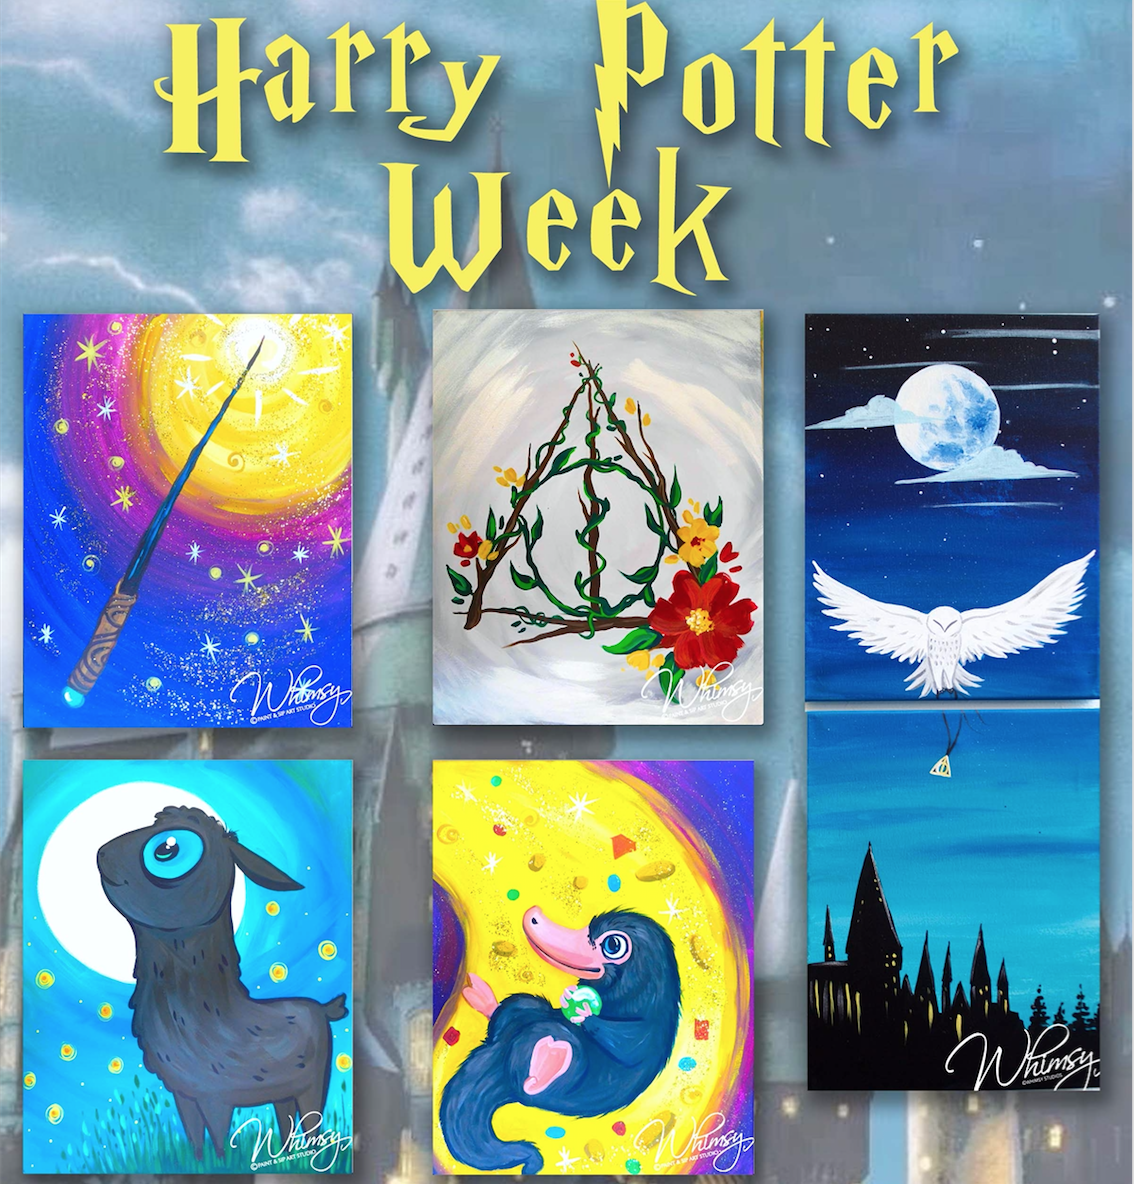 Harry Potter Week Full Week